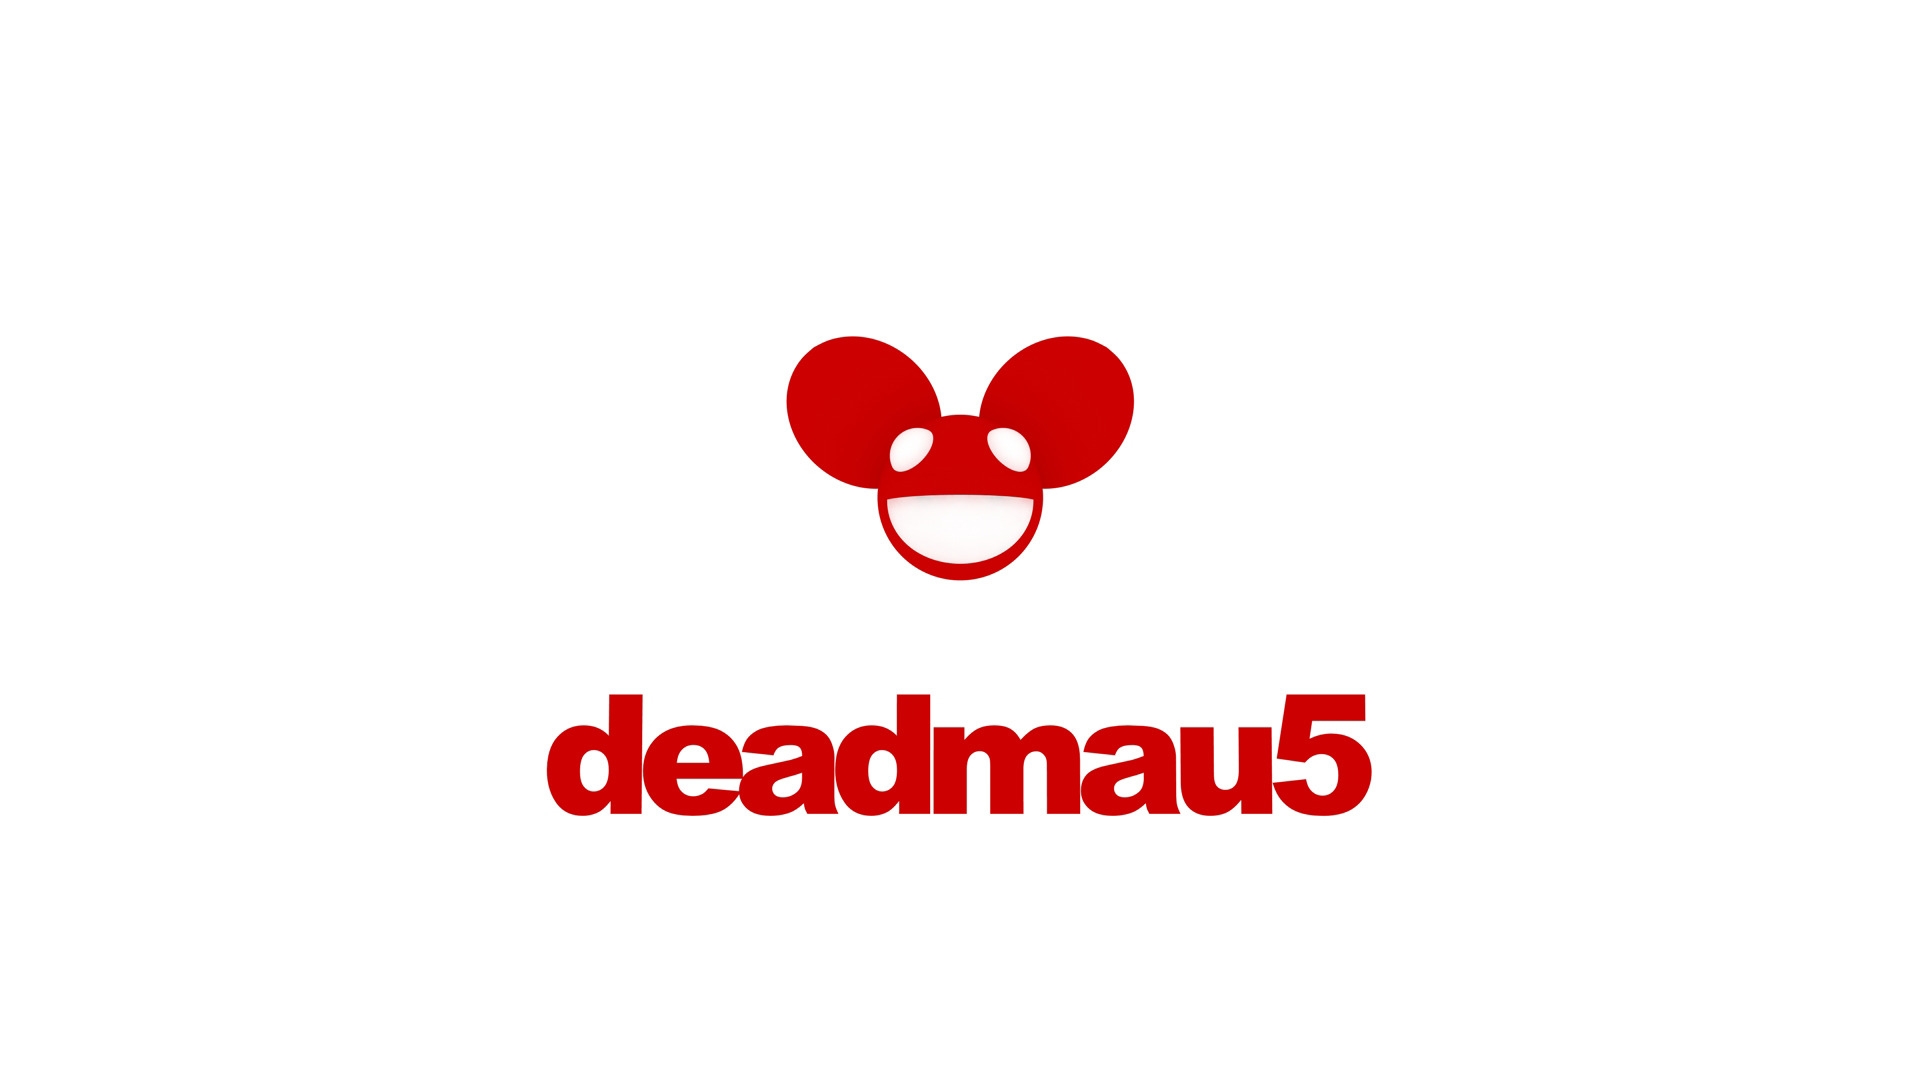 Deadmau5 Logo for 1920 x 1080 HDTV 1080p resolution